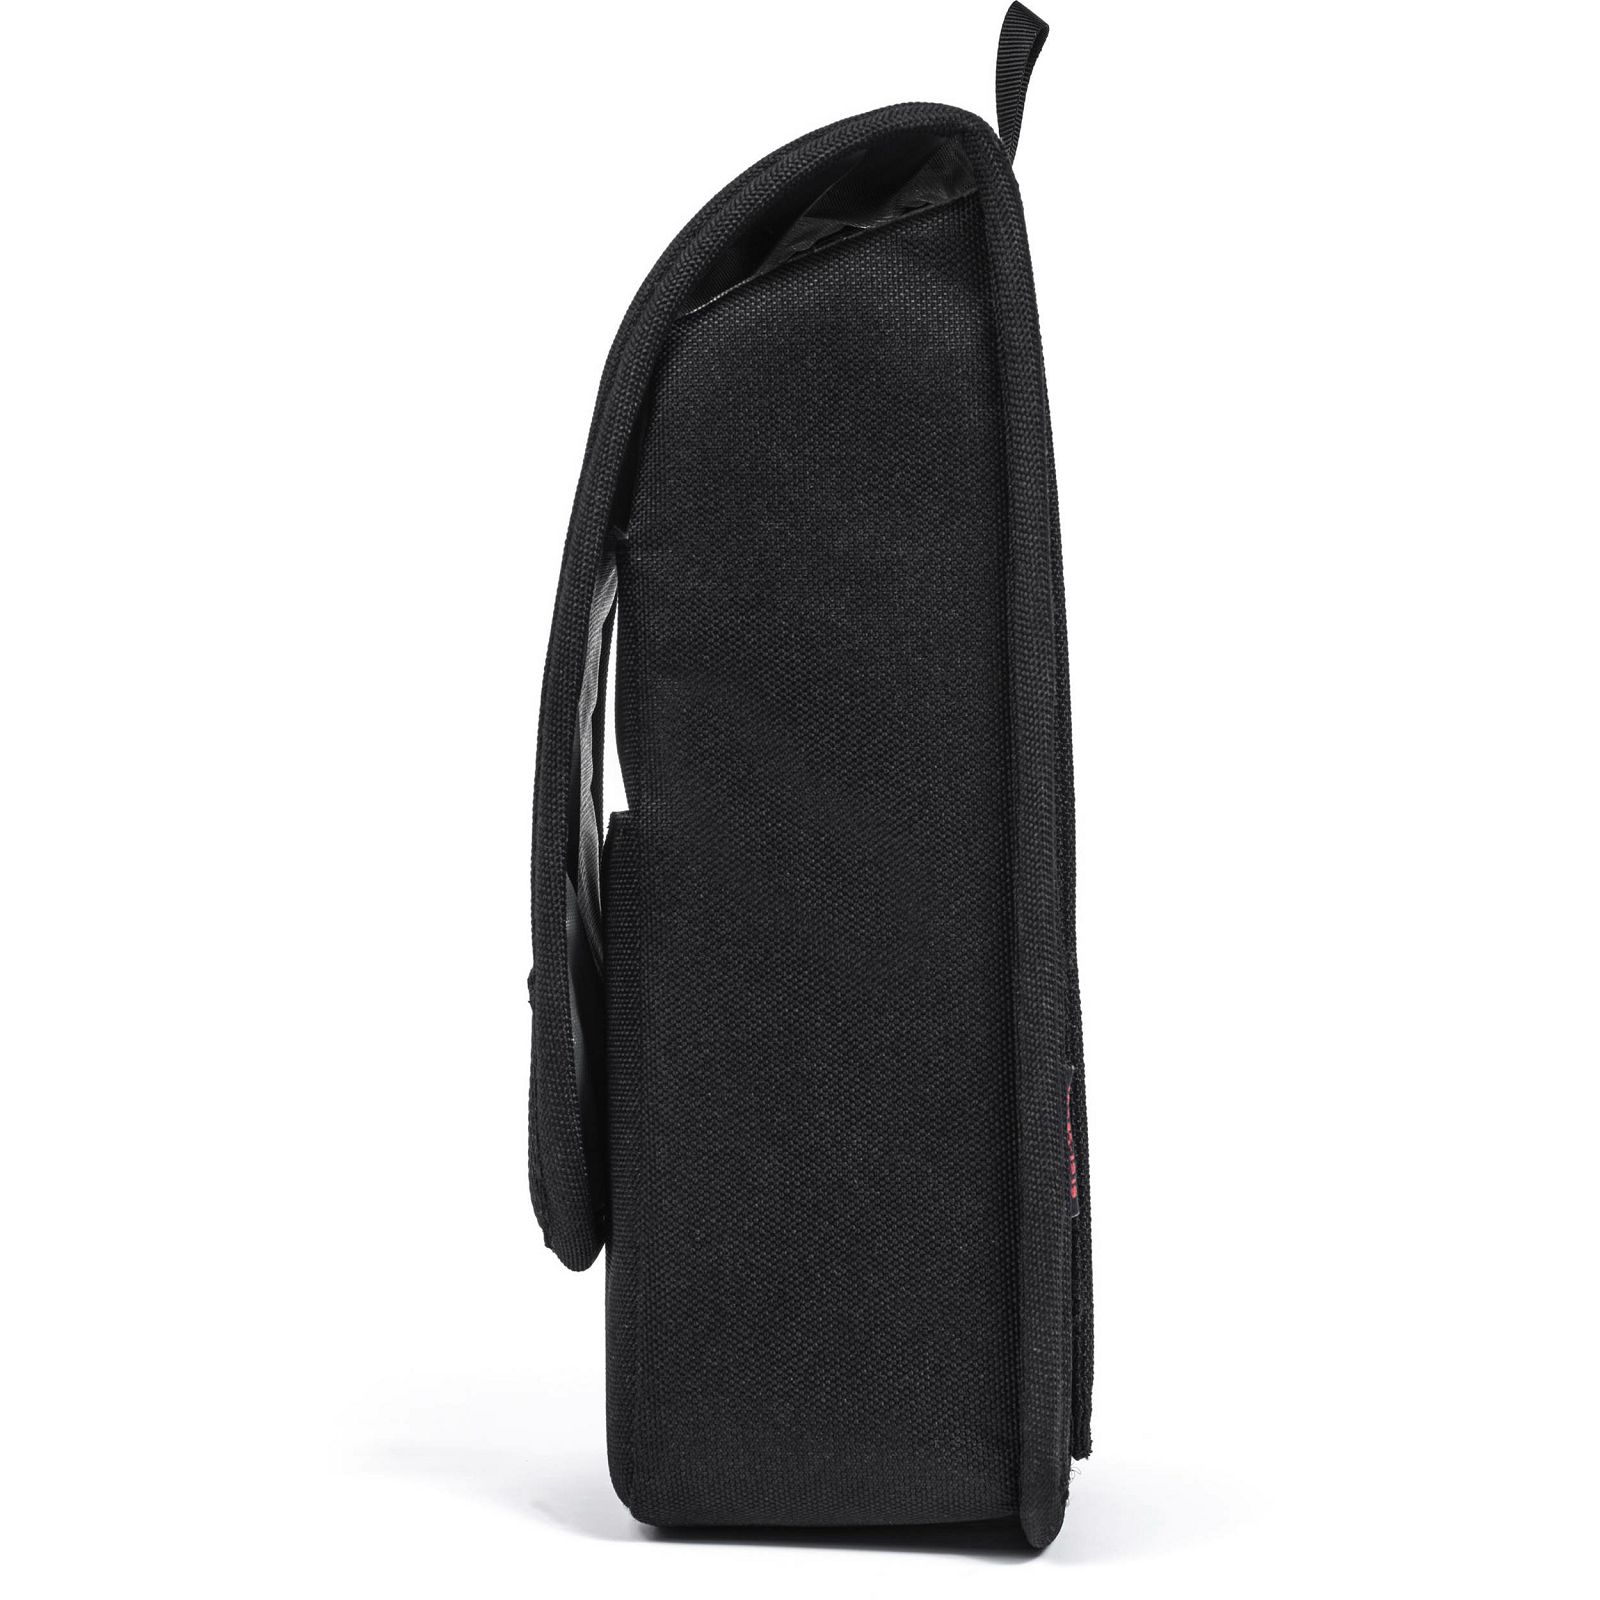 Tamrac Arc Flash Pocket 1.7 Black torbica za bljeskalicu (T0345-1919)